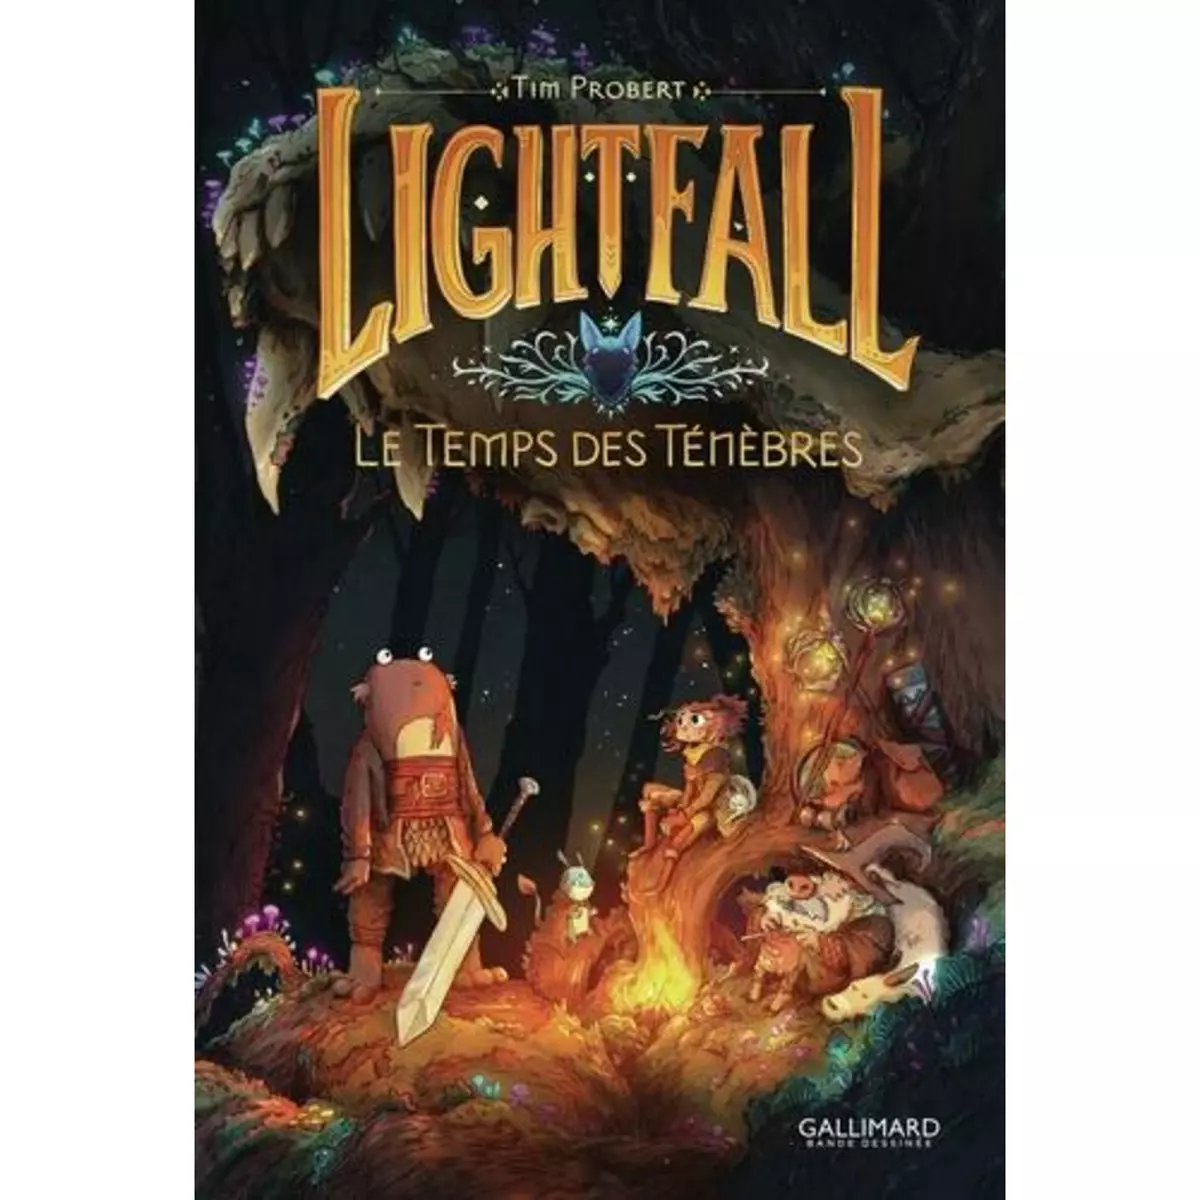  LIGHTFALL TOME 3 : LE TEMPS DES TENEBRES, Probert Tim